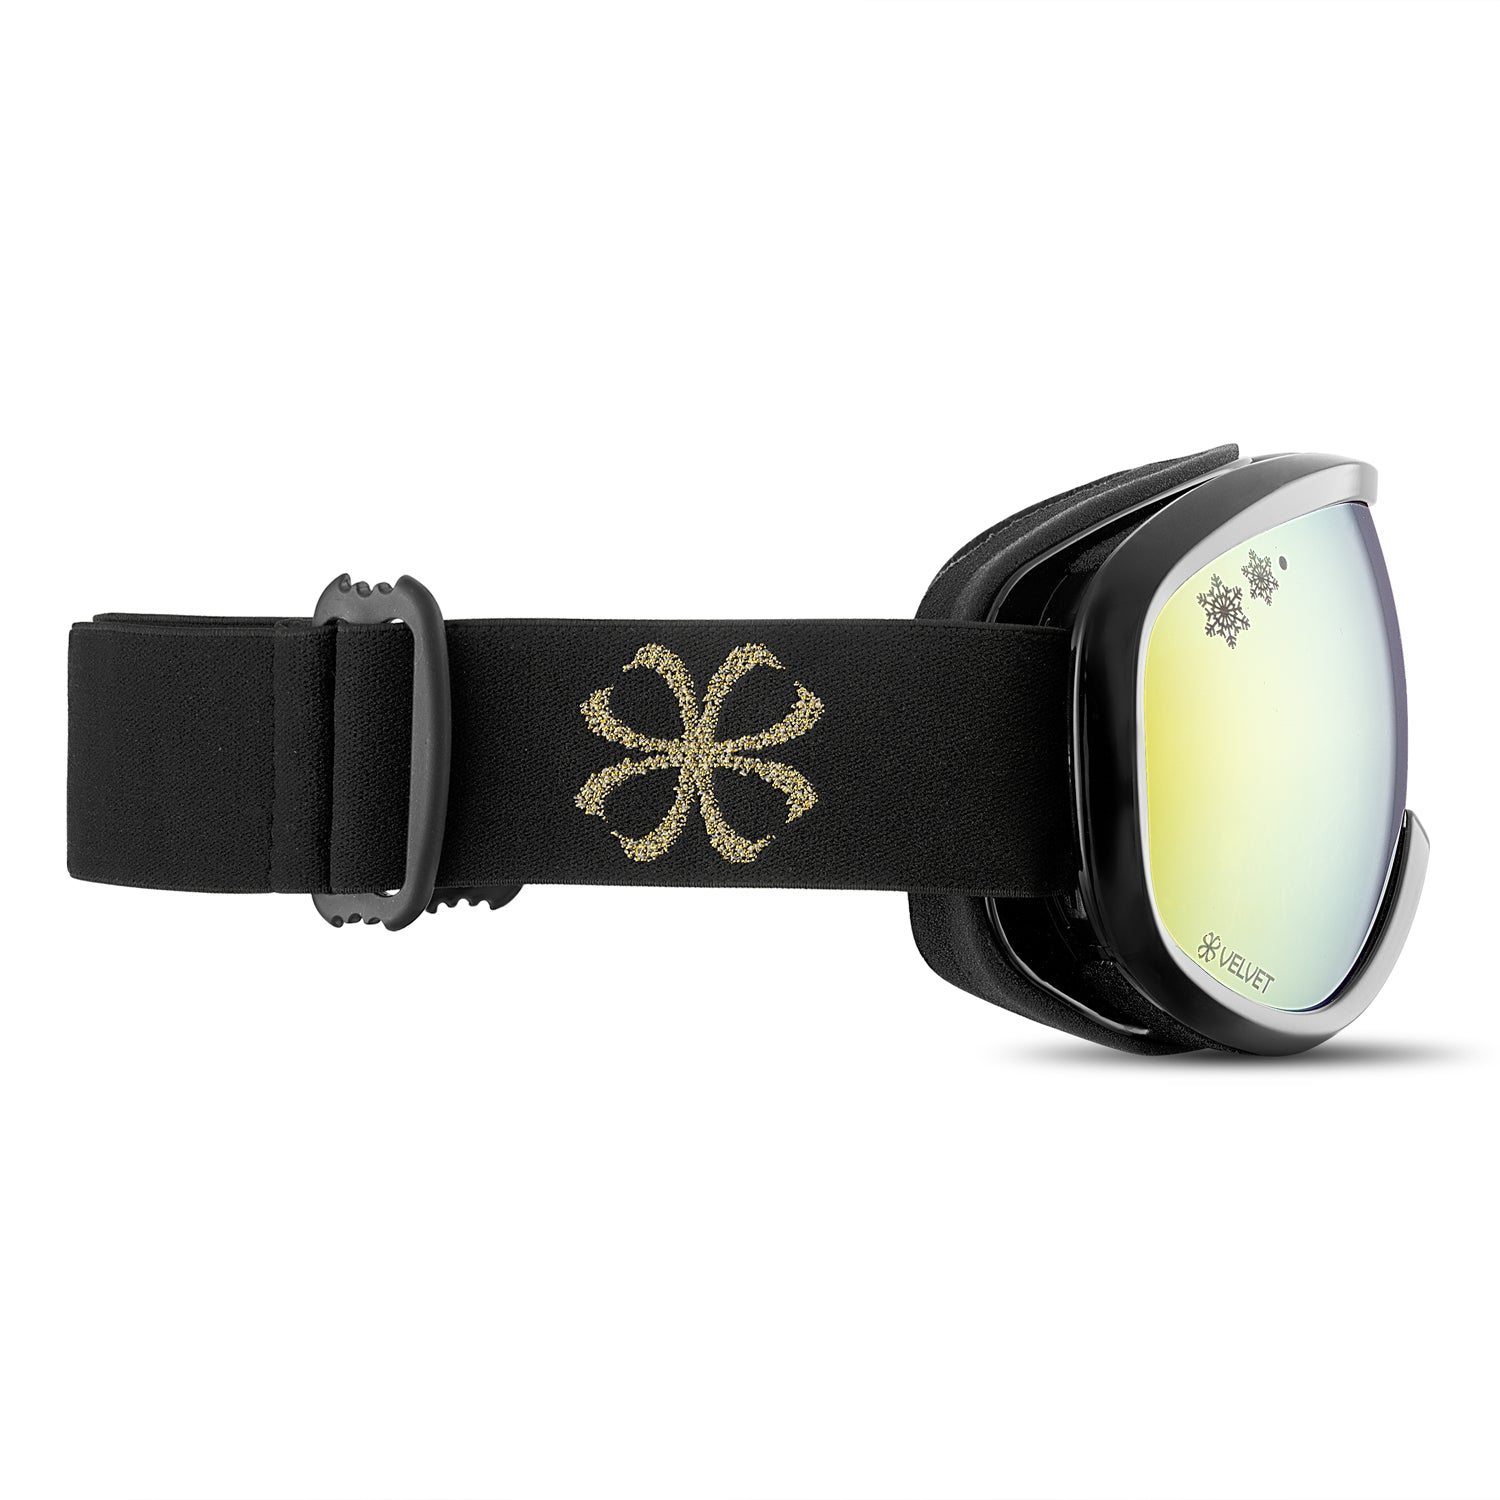 The Flurry Snow Goggle - Black - Velvet Eyewear